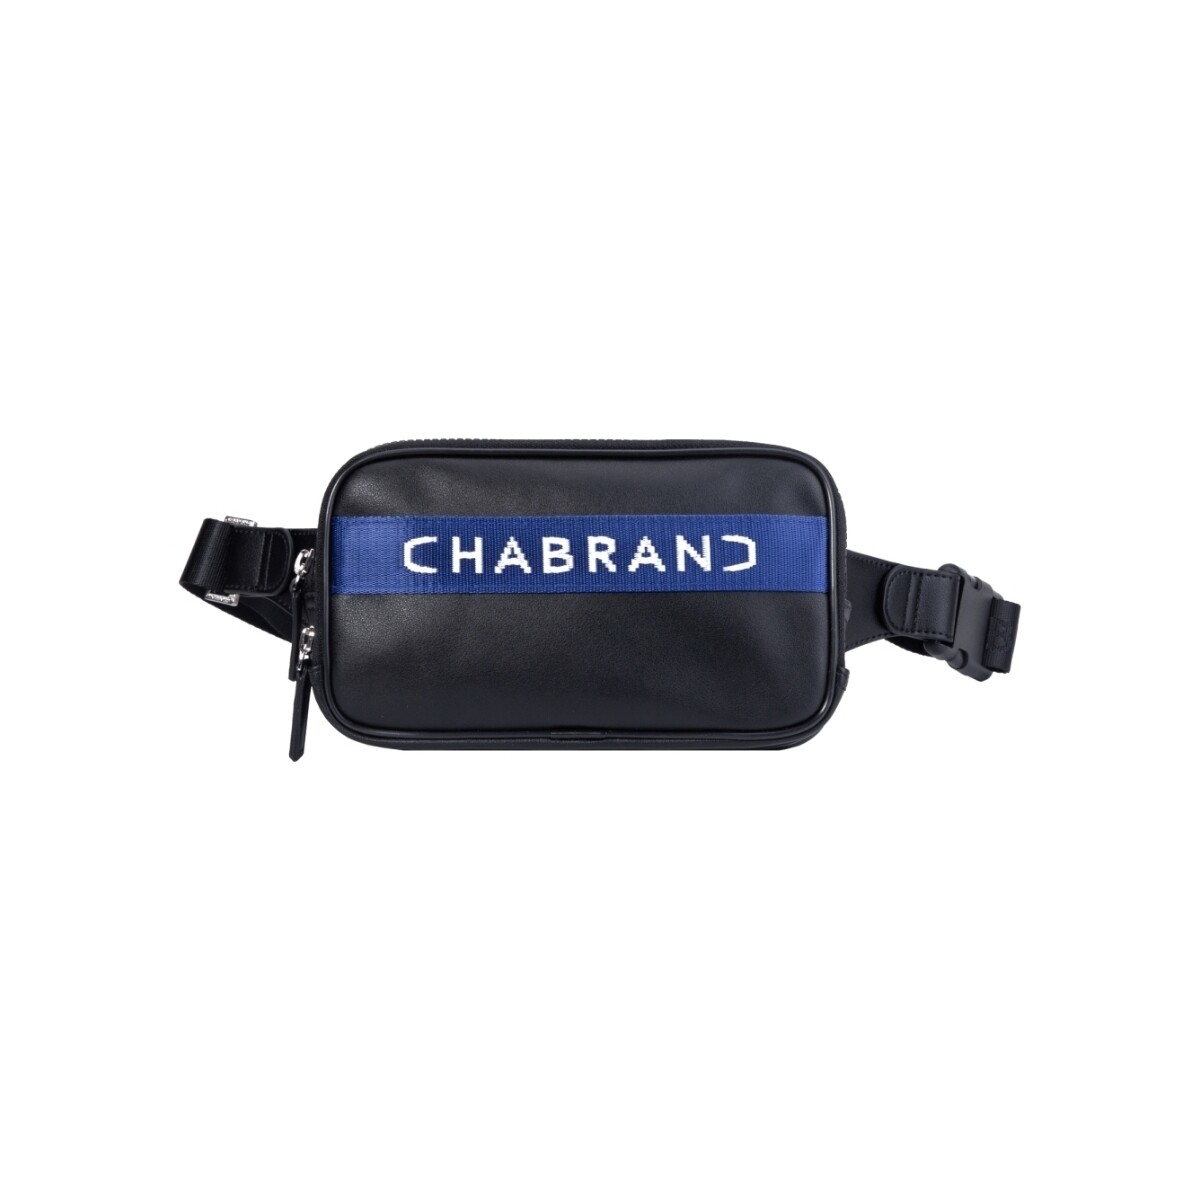 Chabrand Noir Banane Ref 44673 127 Noir Bleu 22*13*6 cm